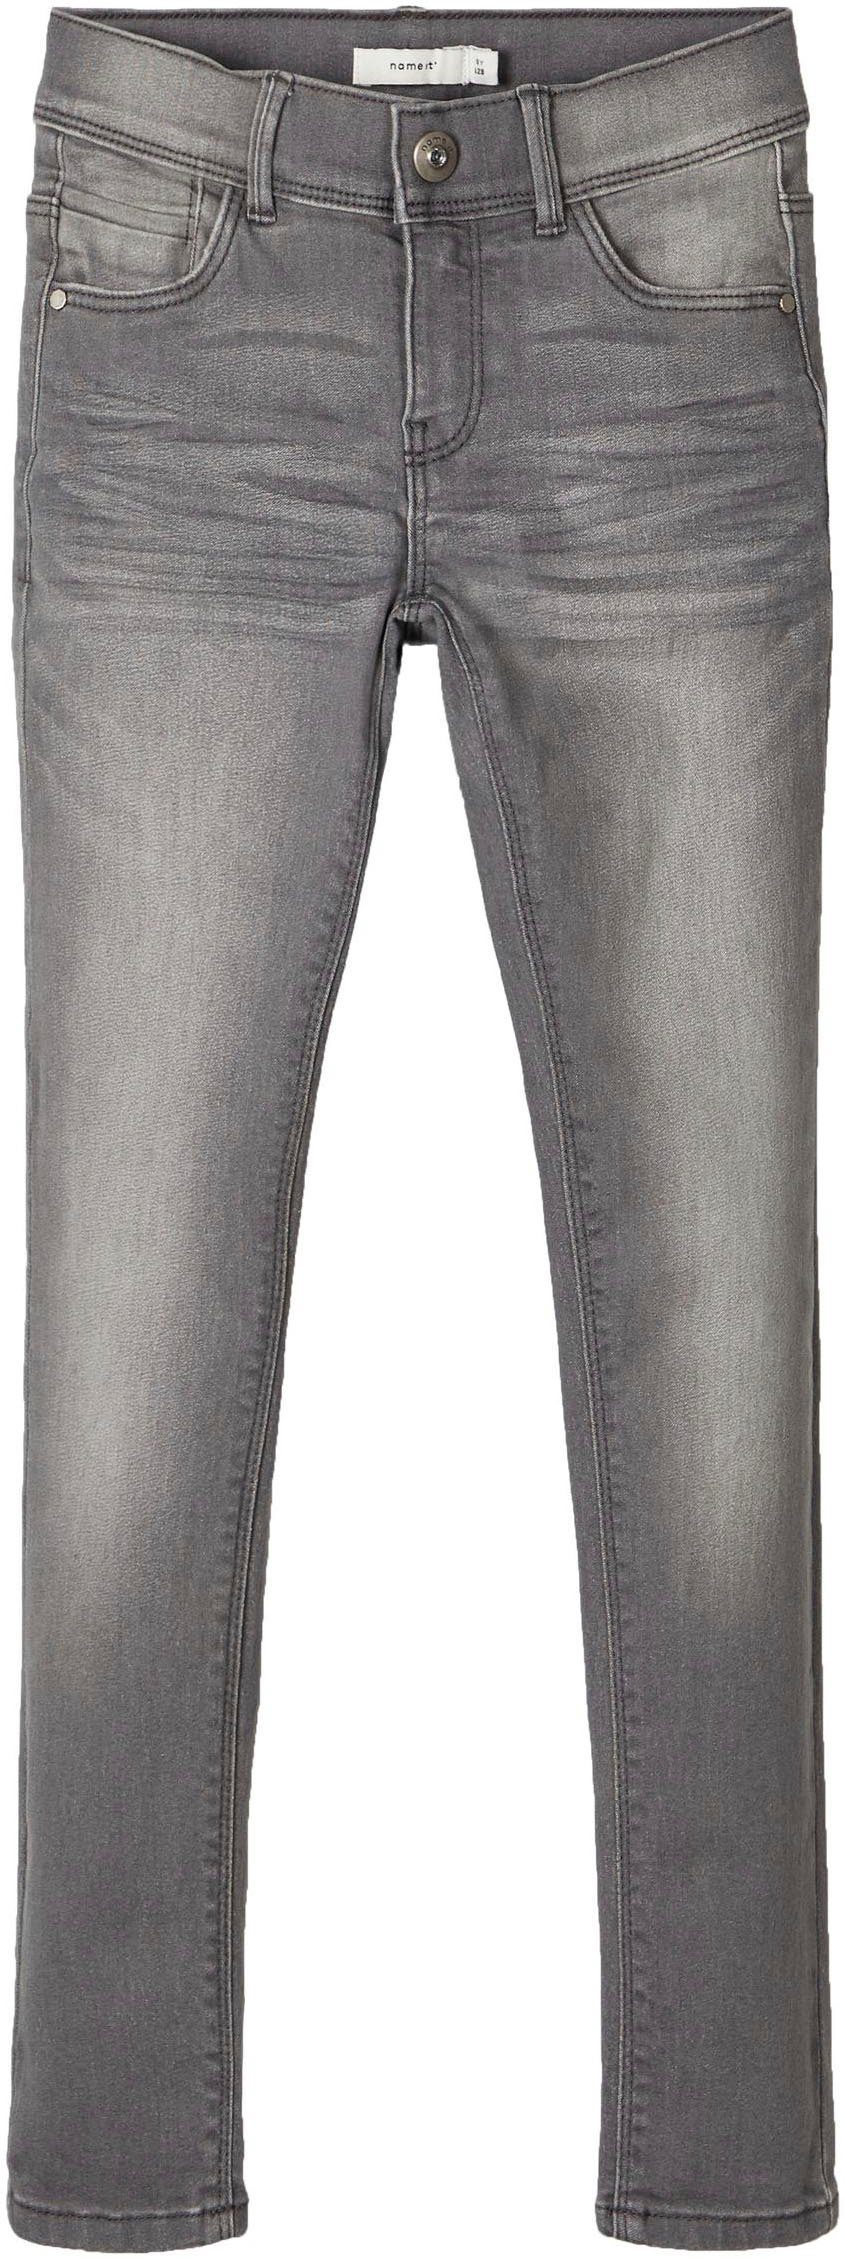 denim PANT grey Stretch-Jeans light NKFPOLLY Name It DNMATASI